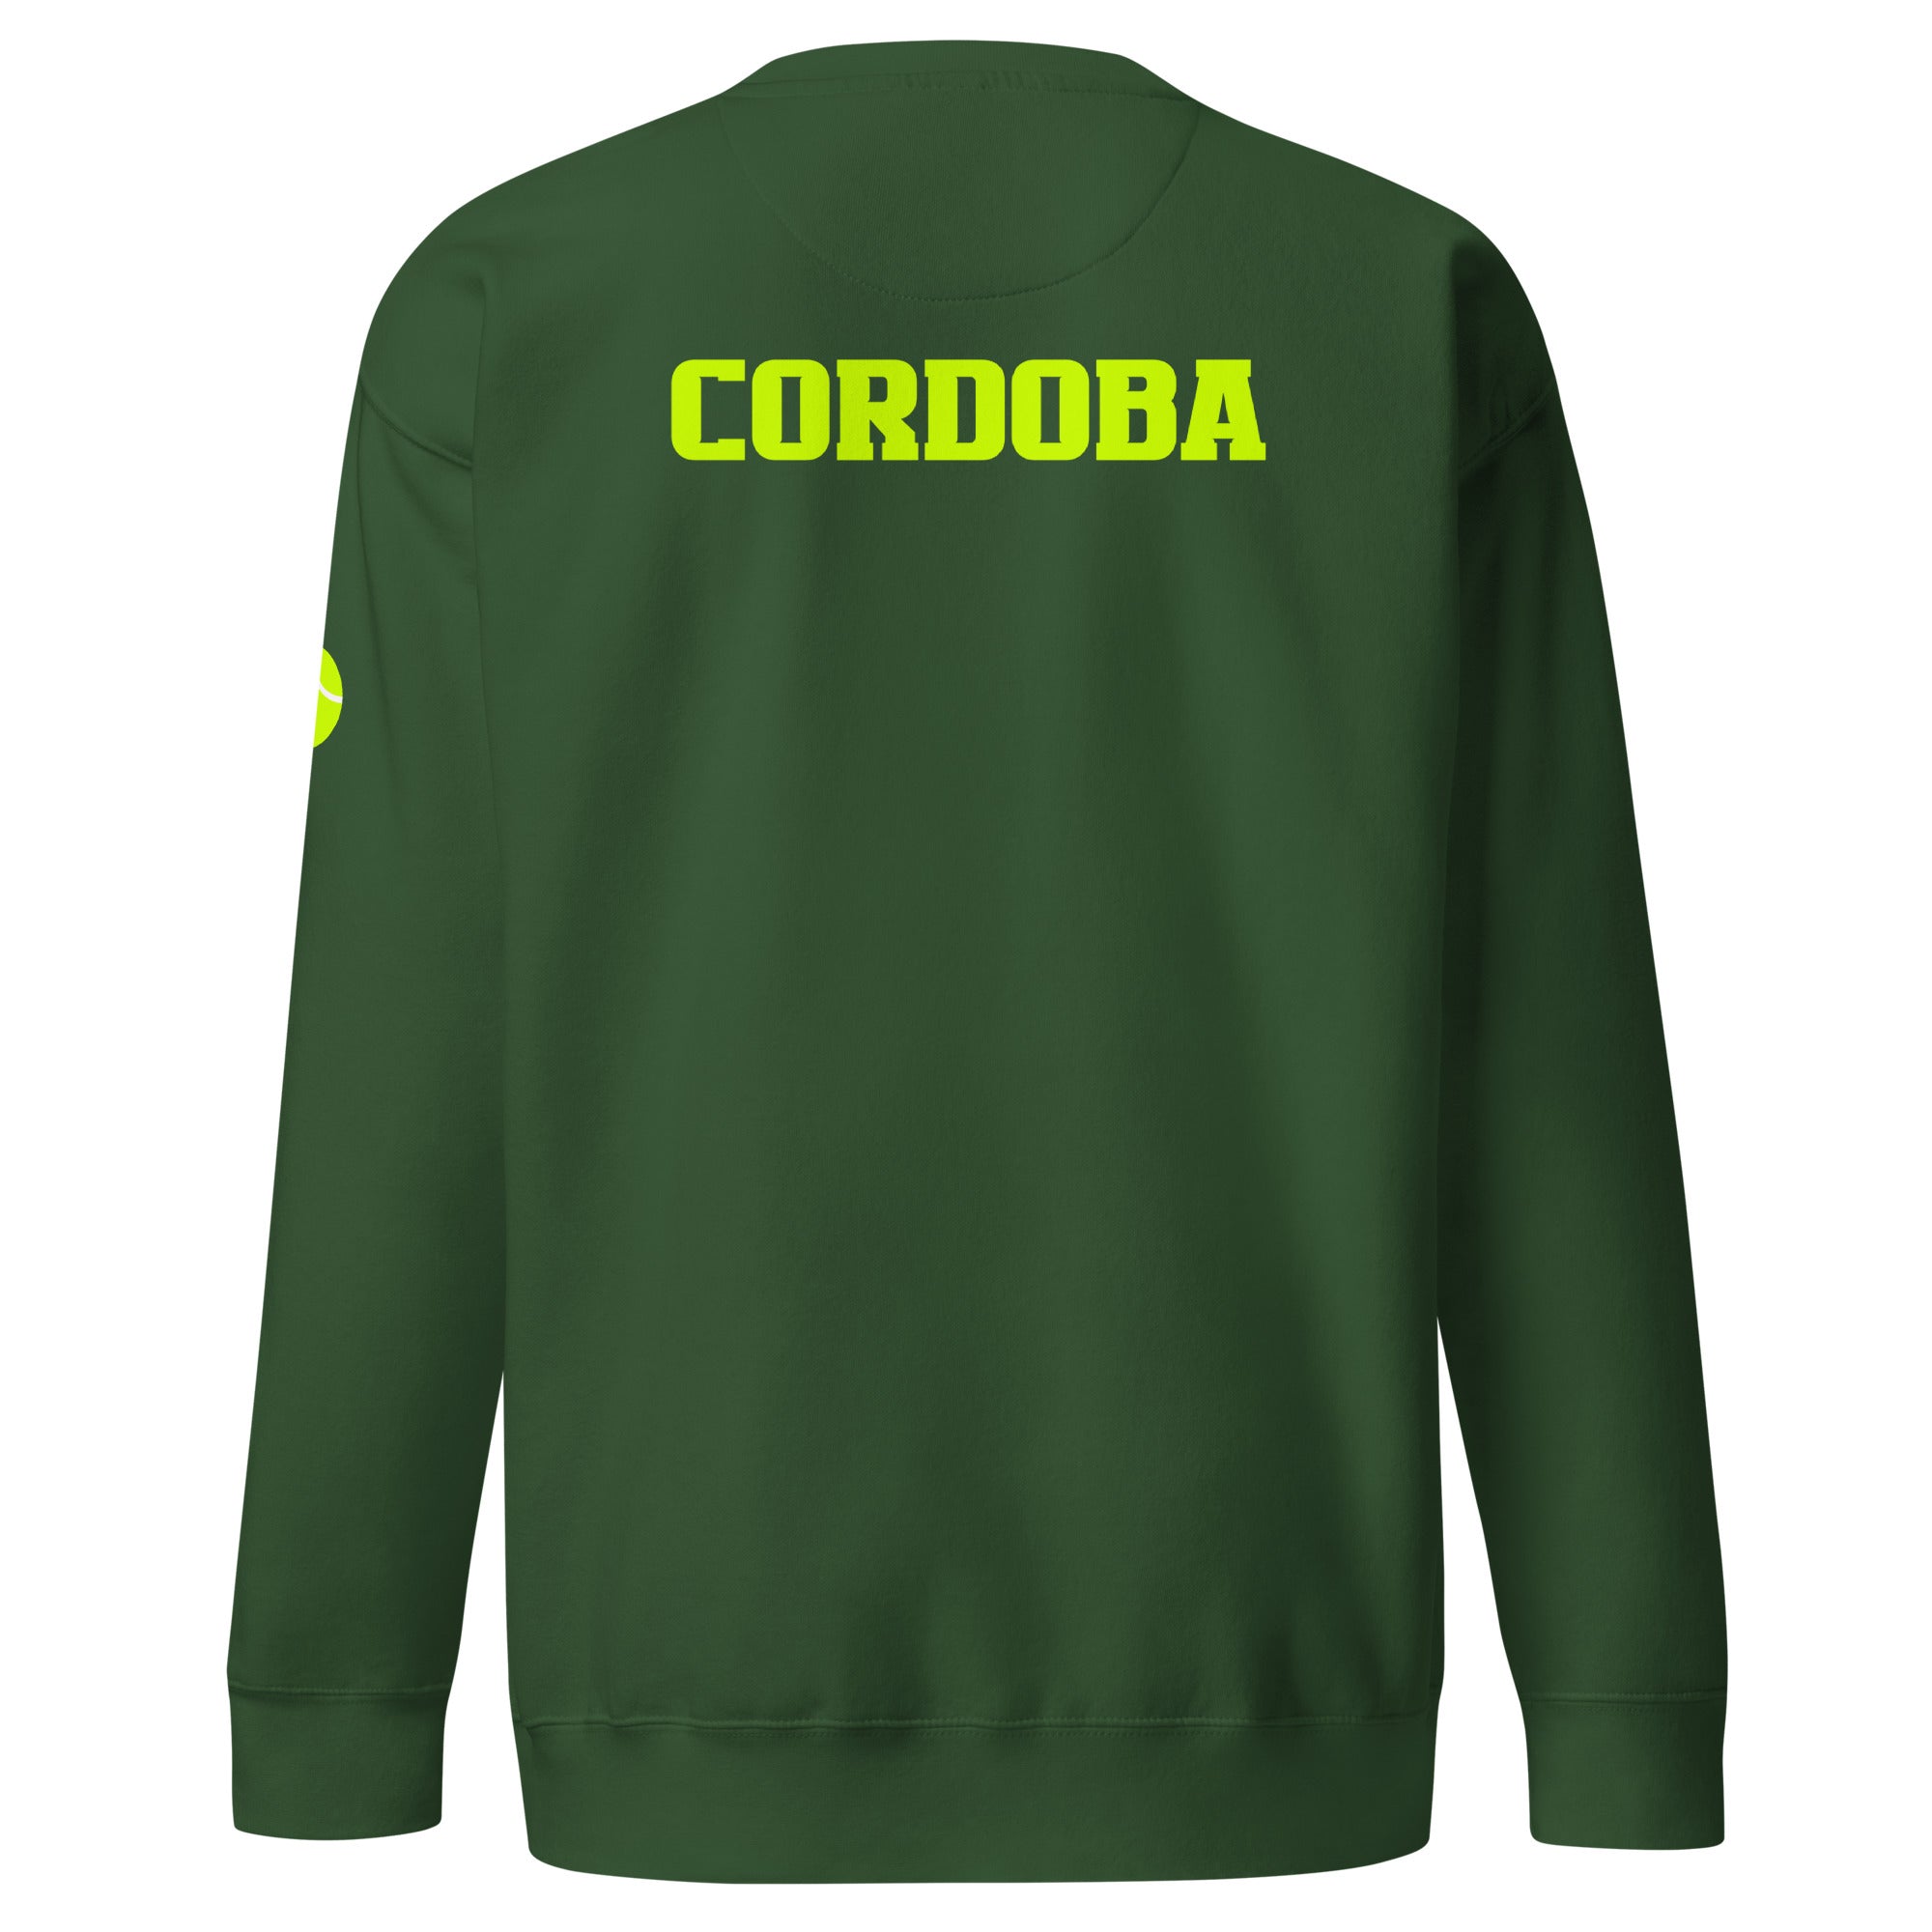 Unisex Premium Sweatshirt - Tennis Masters Cordoba - GRAPHIC T-SHIRTS